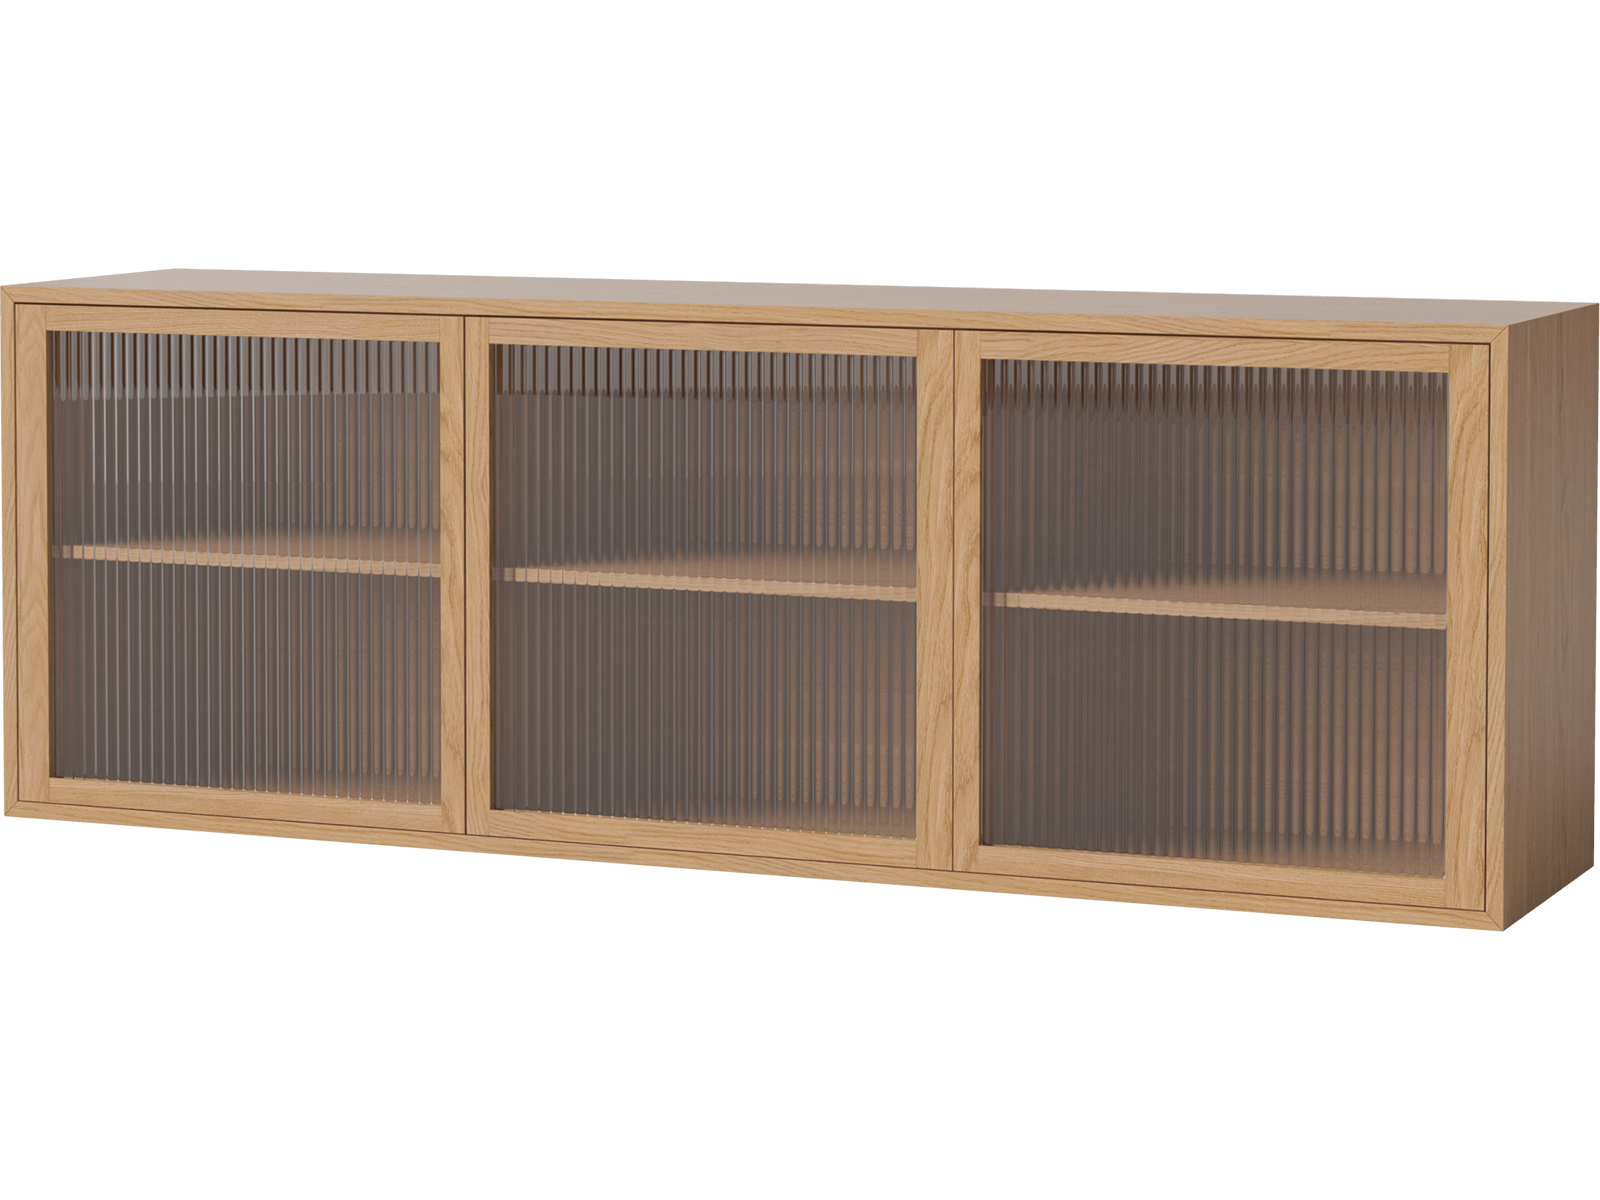 Bolia Case sideboard with shelves // Case komód polcokkal